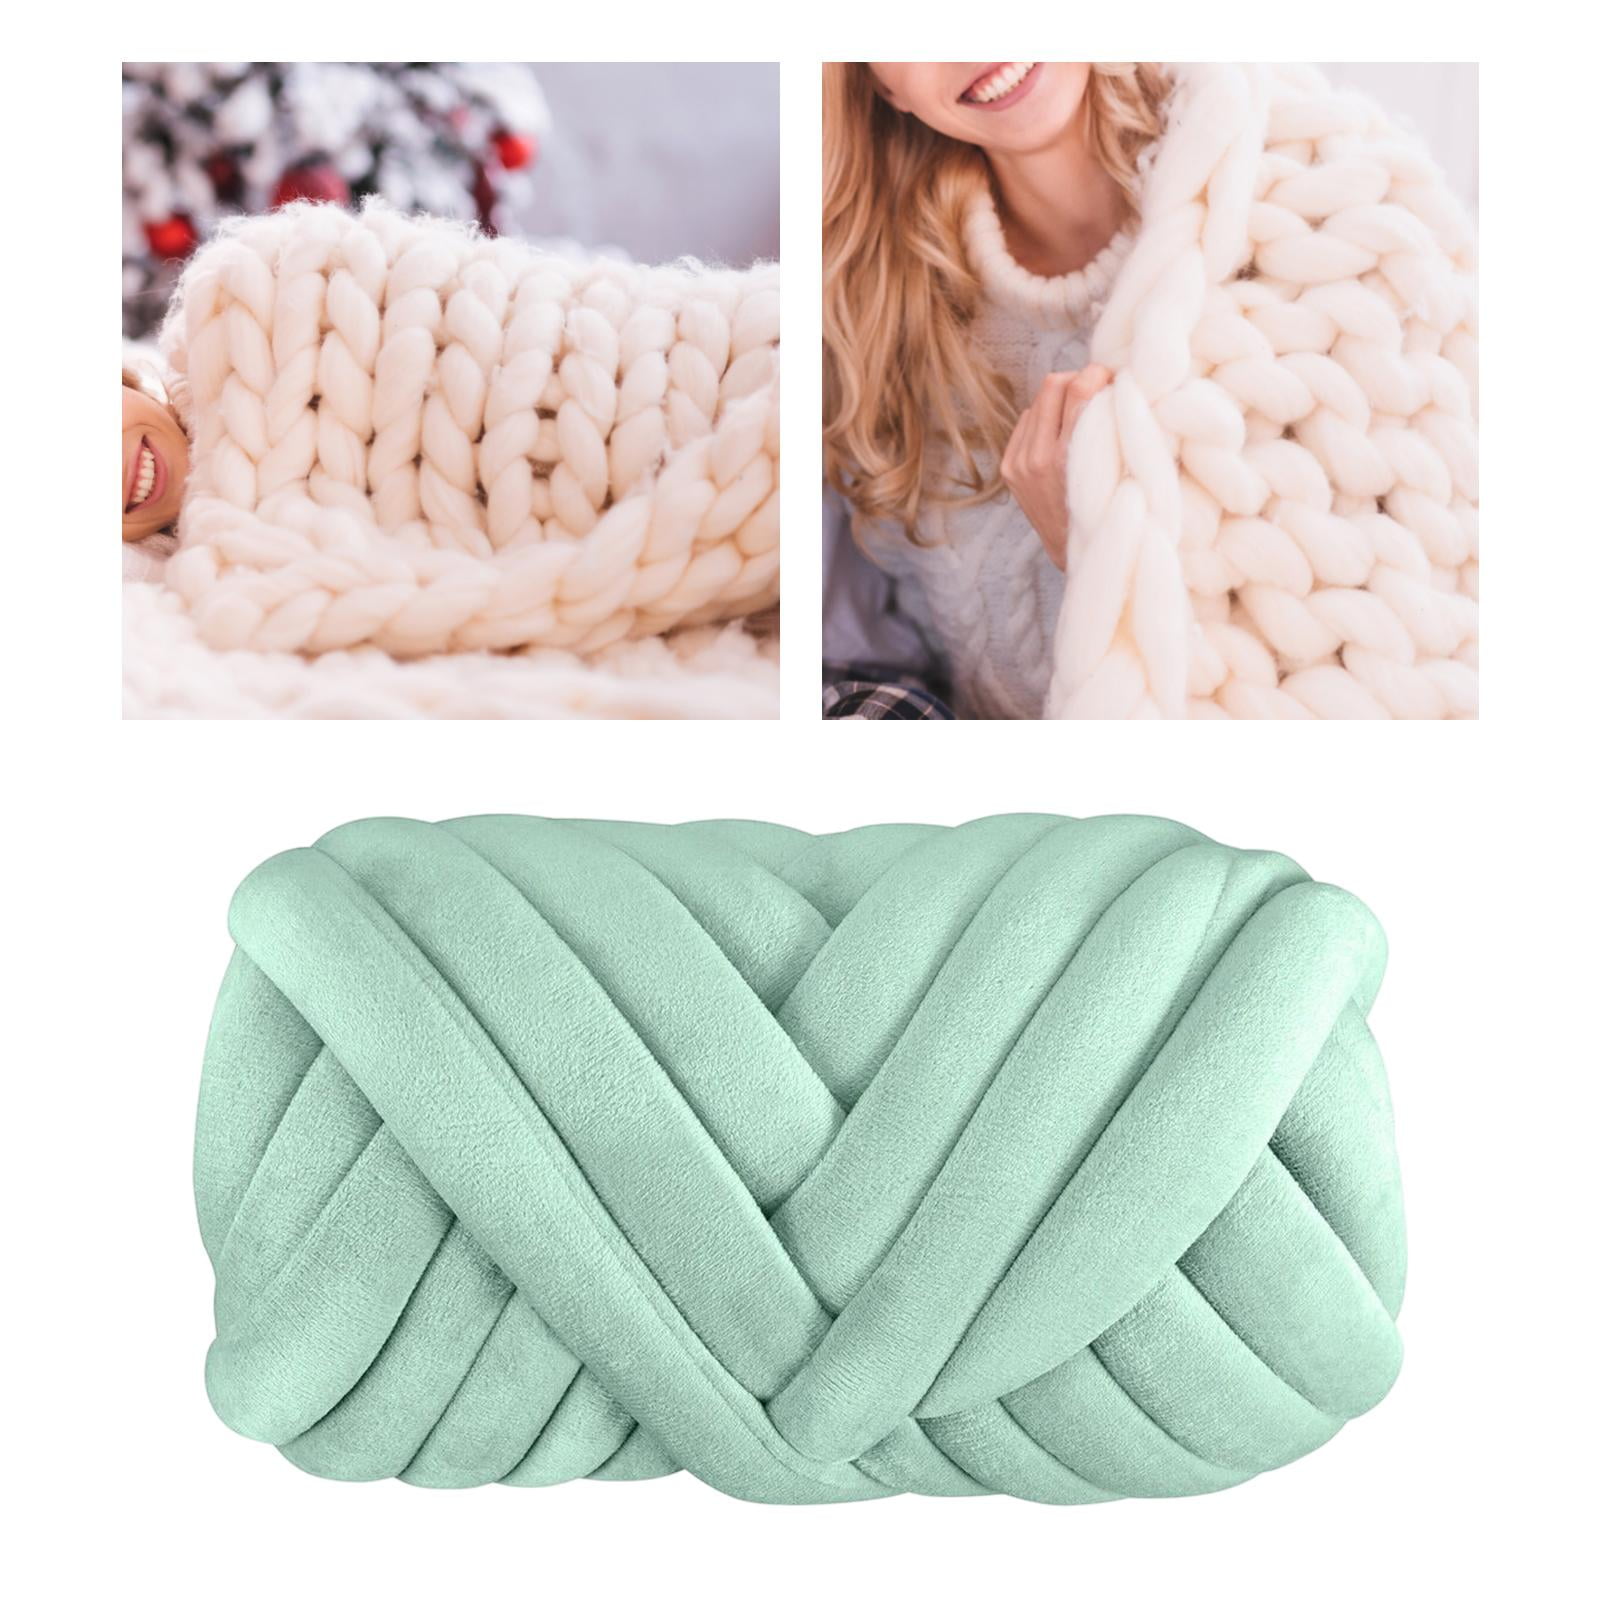 Chunky Yarn Jumbo Tubular Yarn Arm Knit Yarn Crocheting Hand Knit Washable Soft 250g Weight Yarn for Crochet Pillow Baskets Pet Bed Sweaters Light